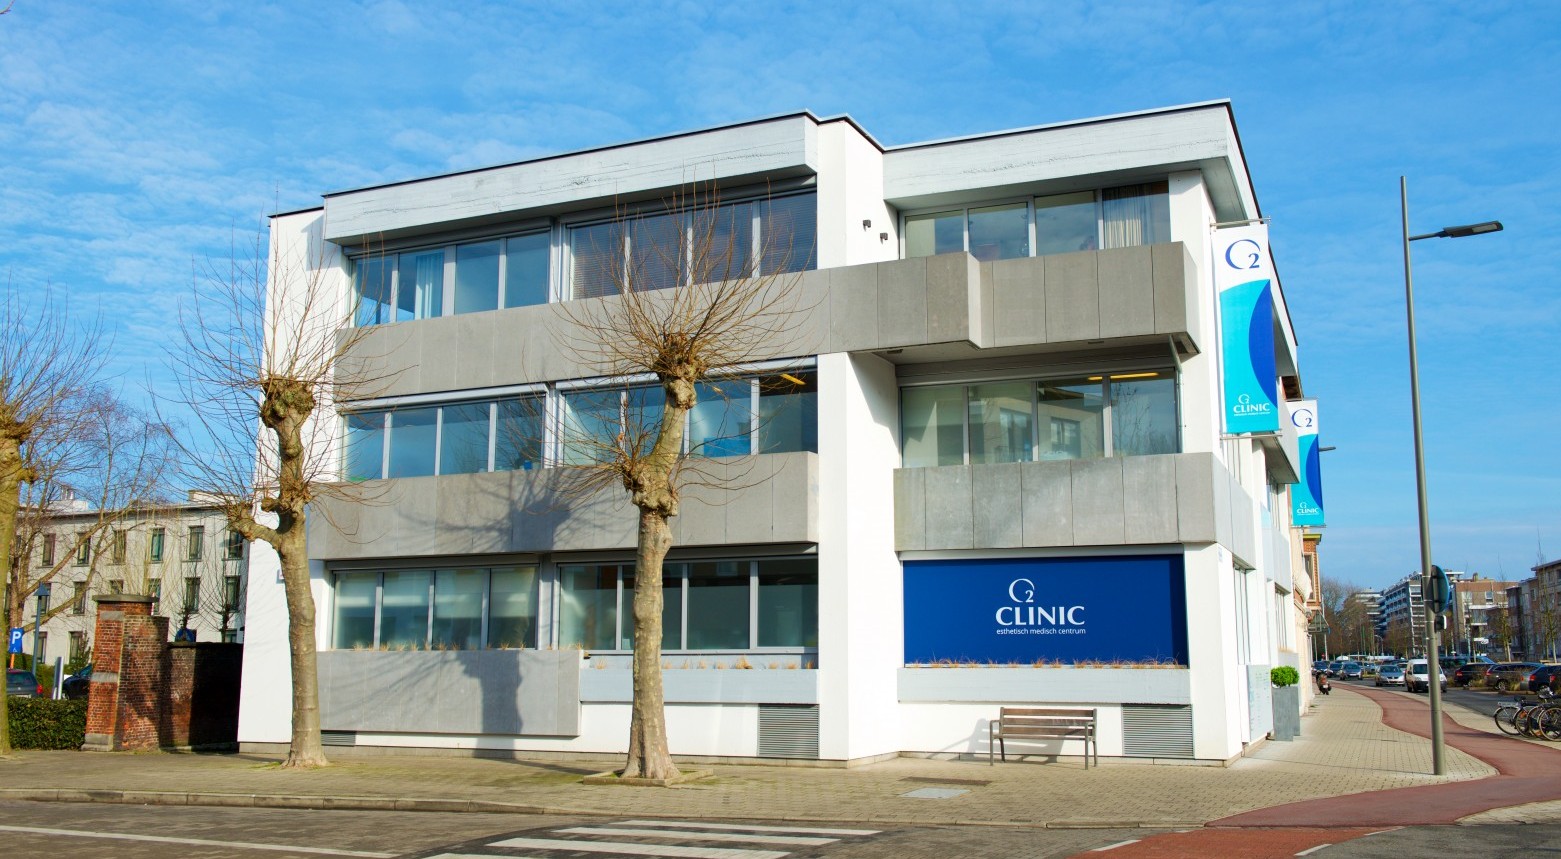 The building of o2 Clinic in Berchem, Antwerp.